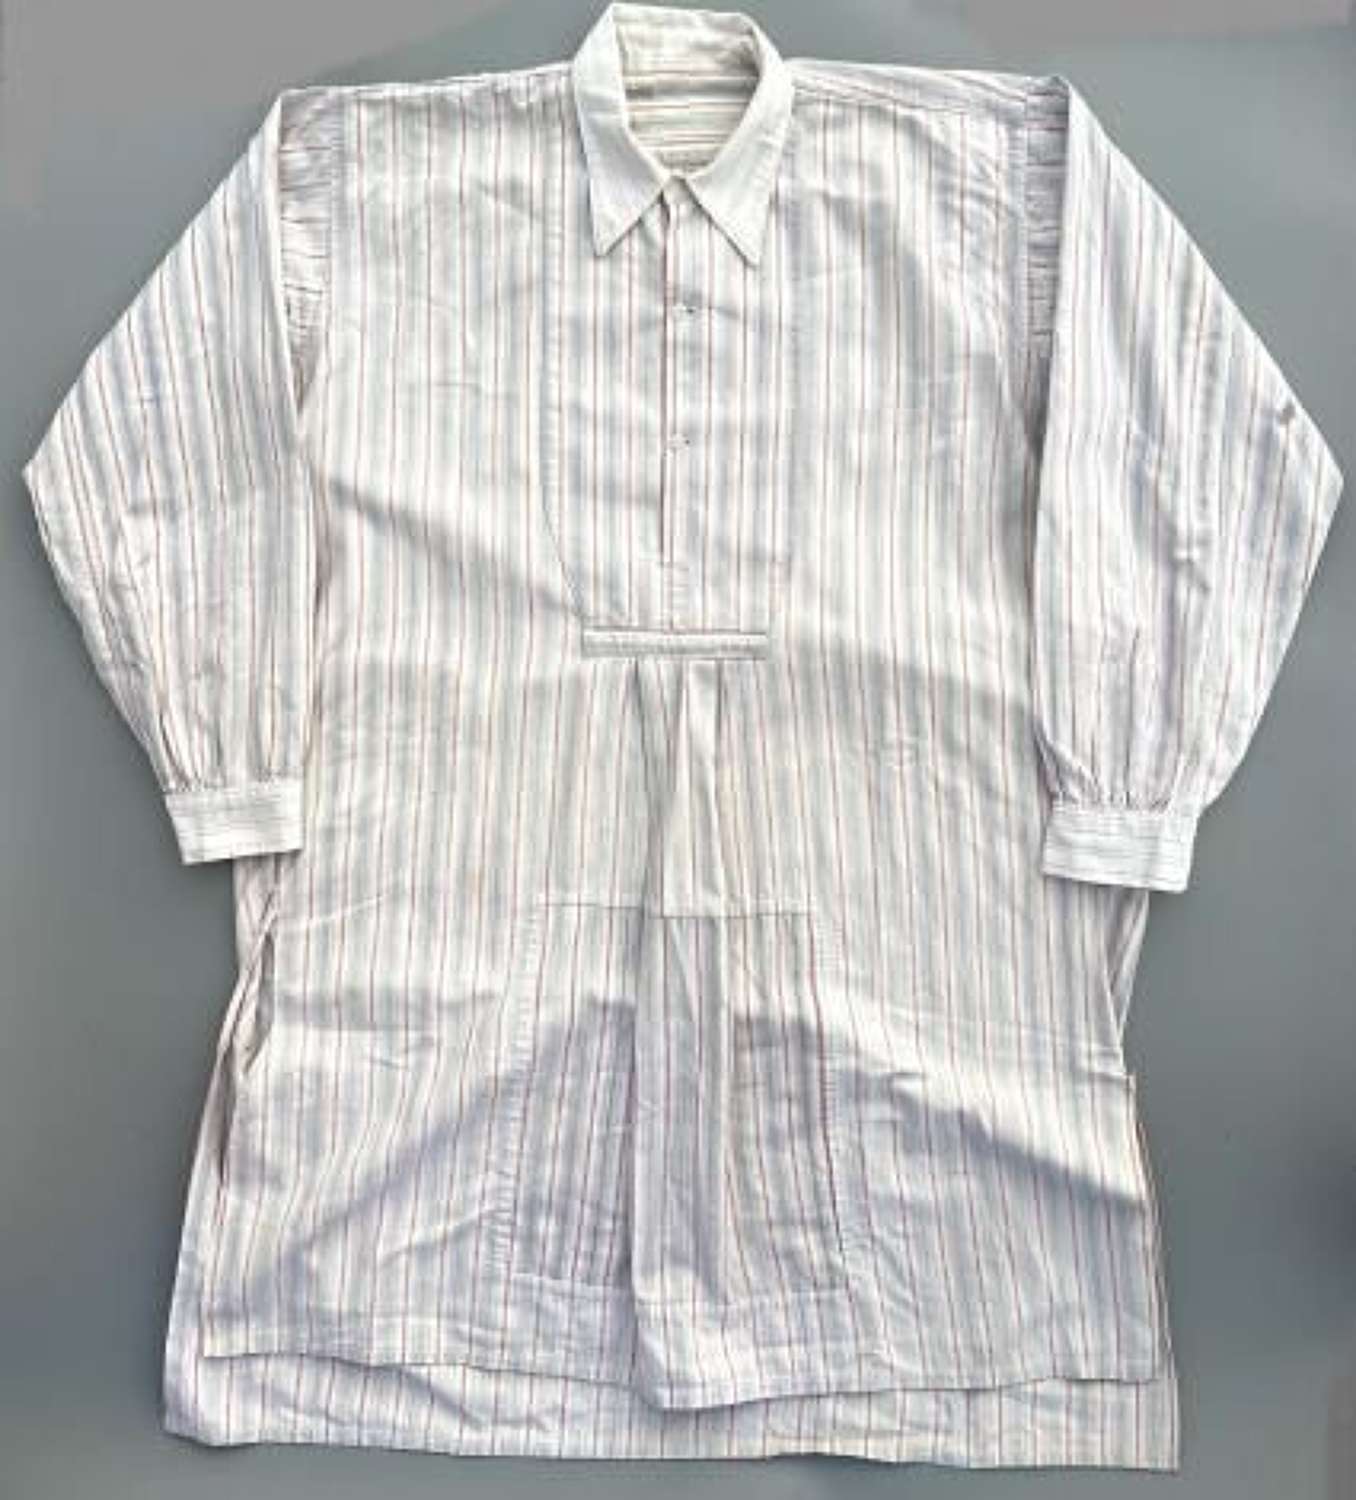 Original 1930s Men's French Collared Shirt